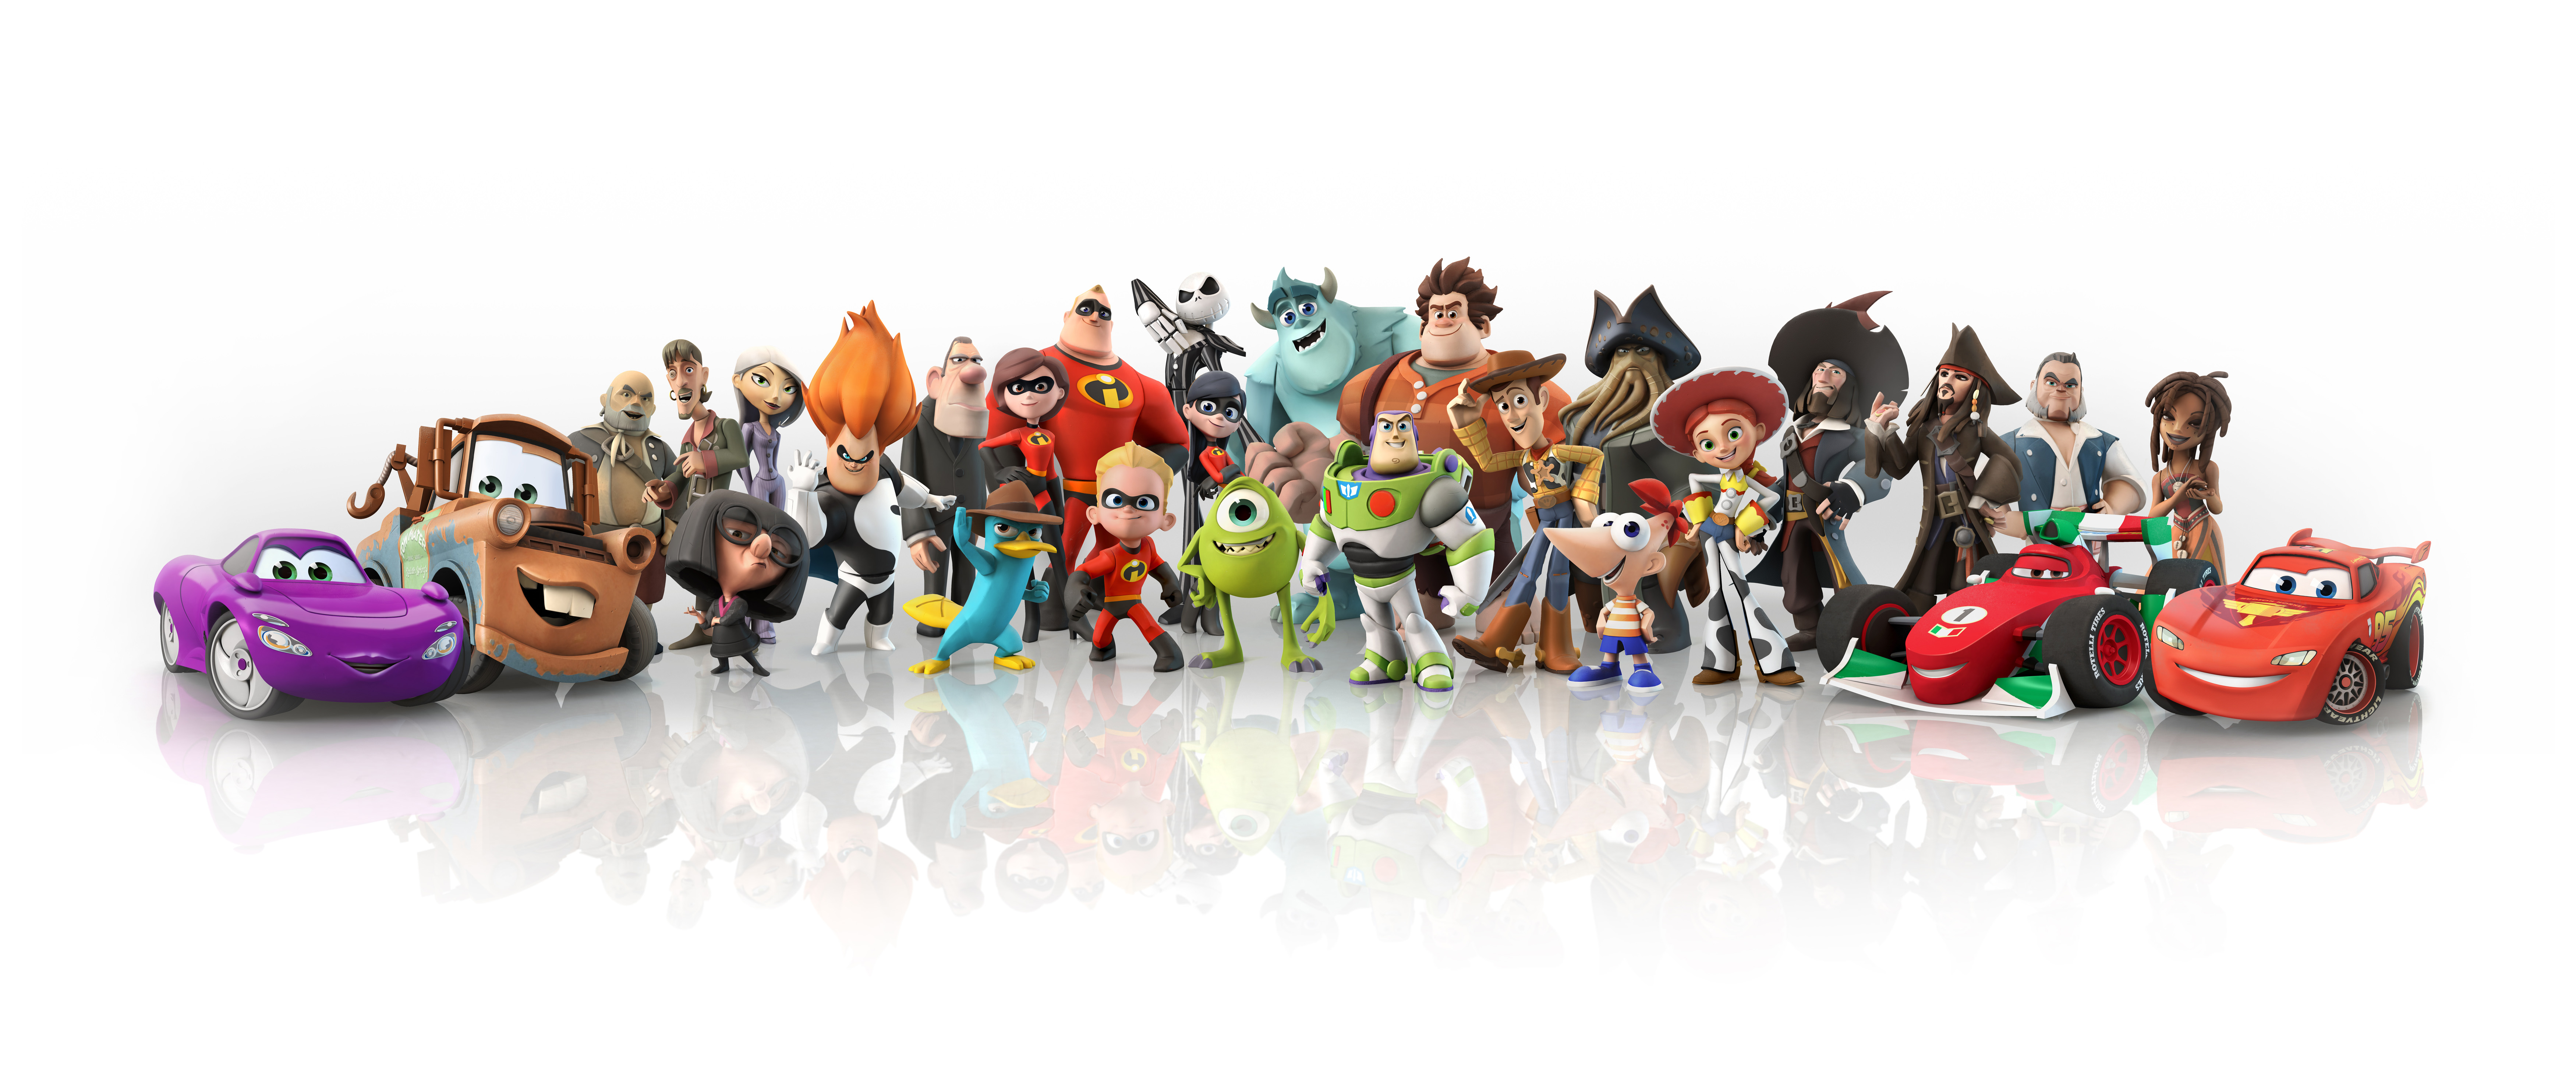 Pin Pixar Disney Background Desktop Content Uploads1 On